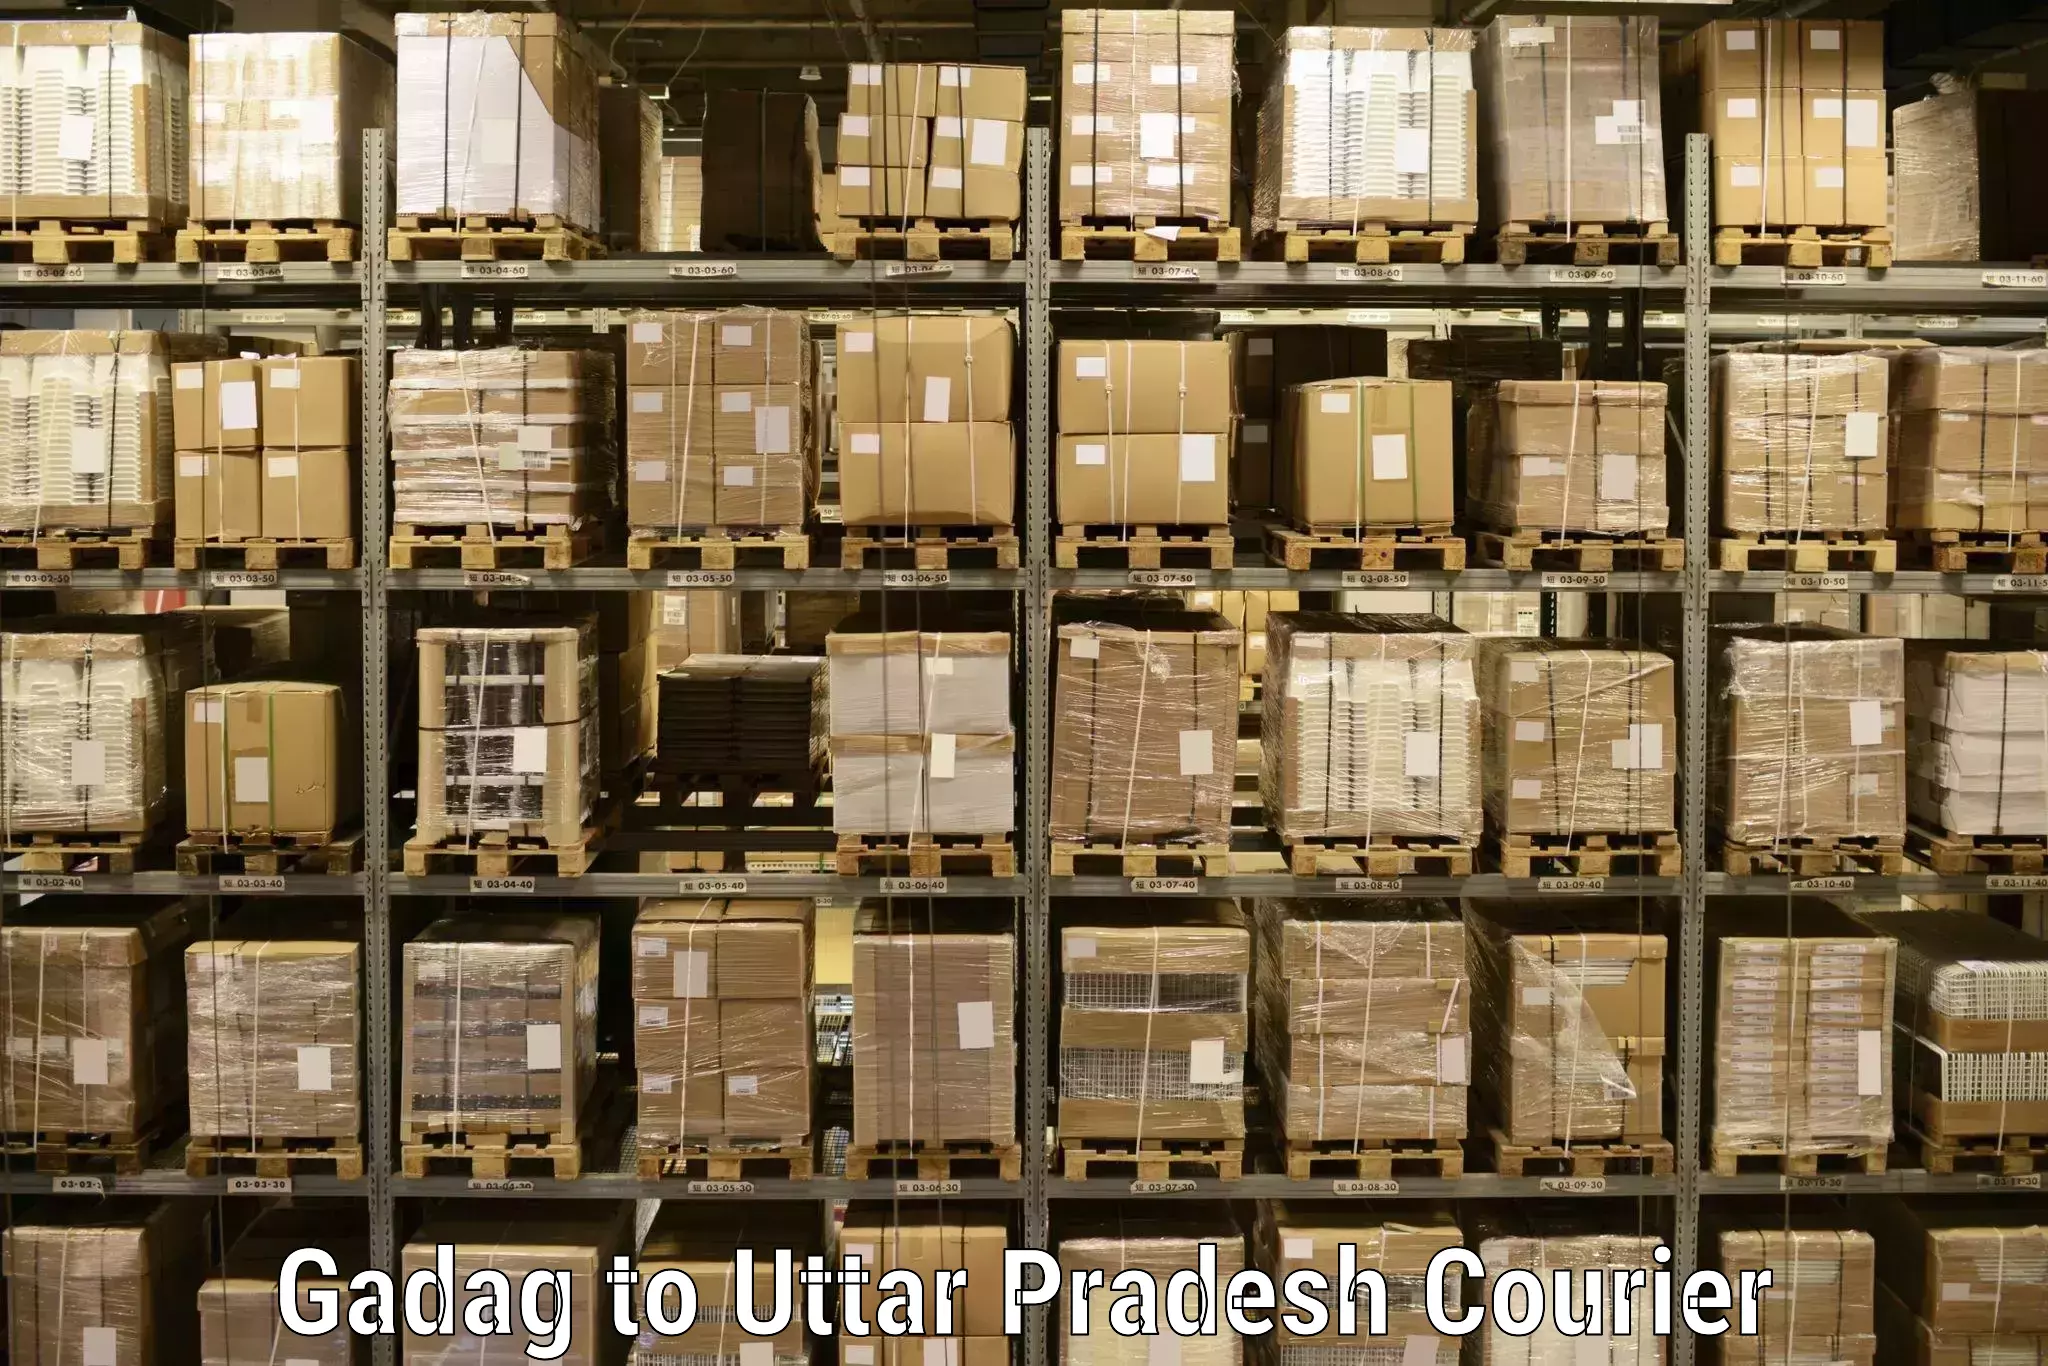 Courier service comparison in Gadag to Bulandshahr